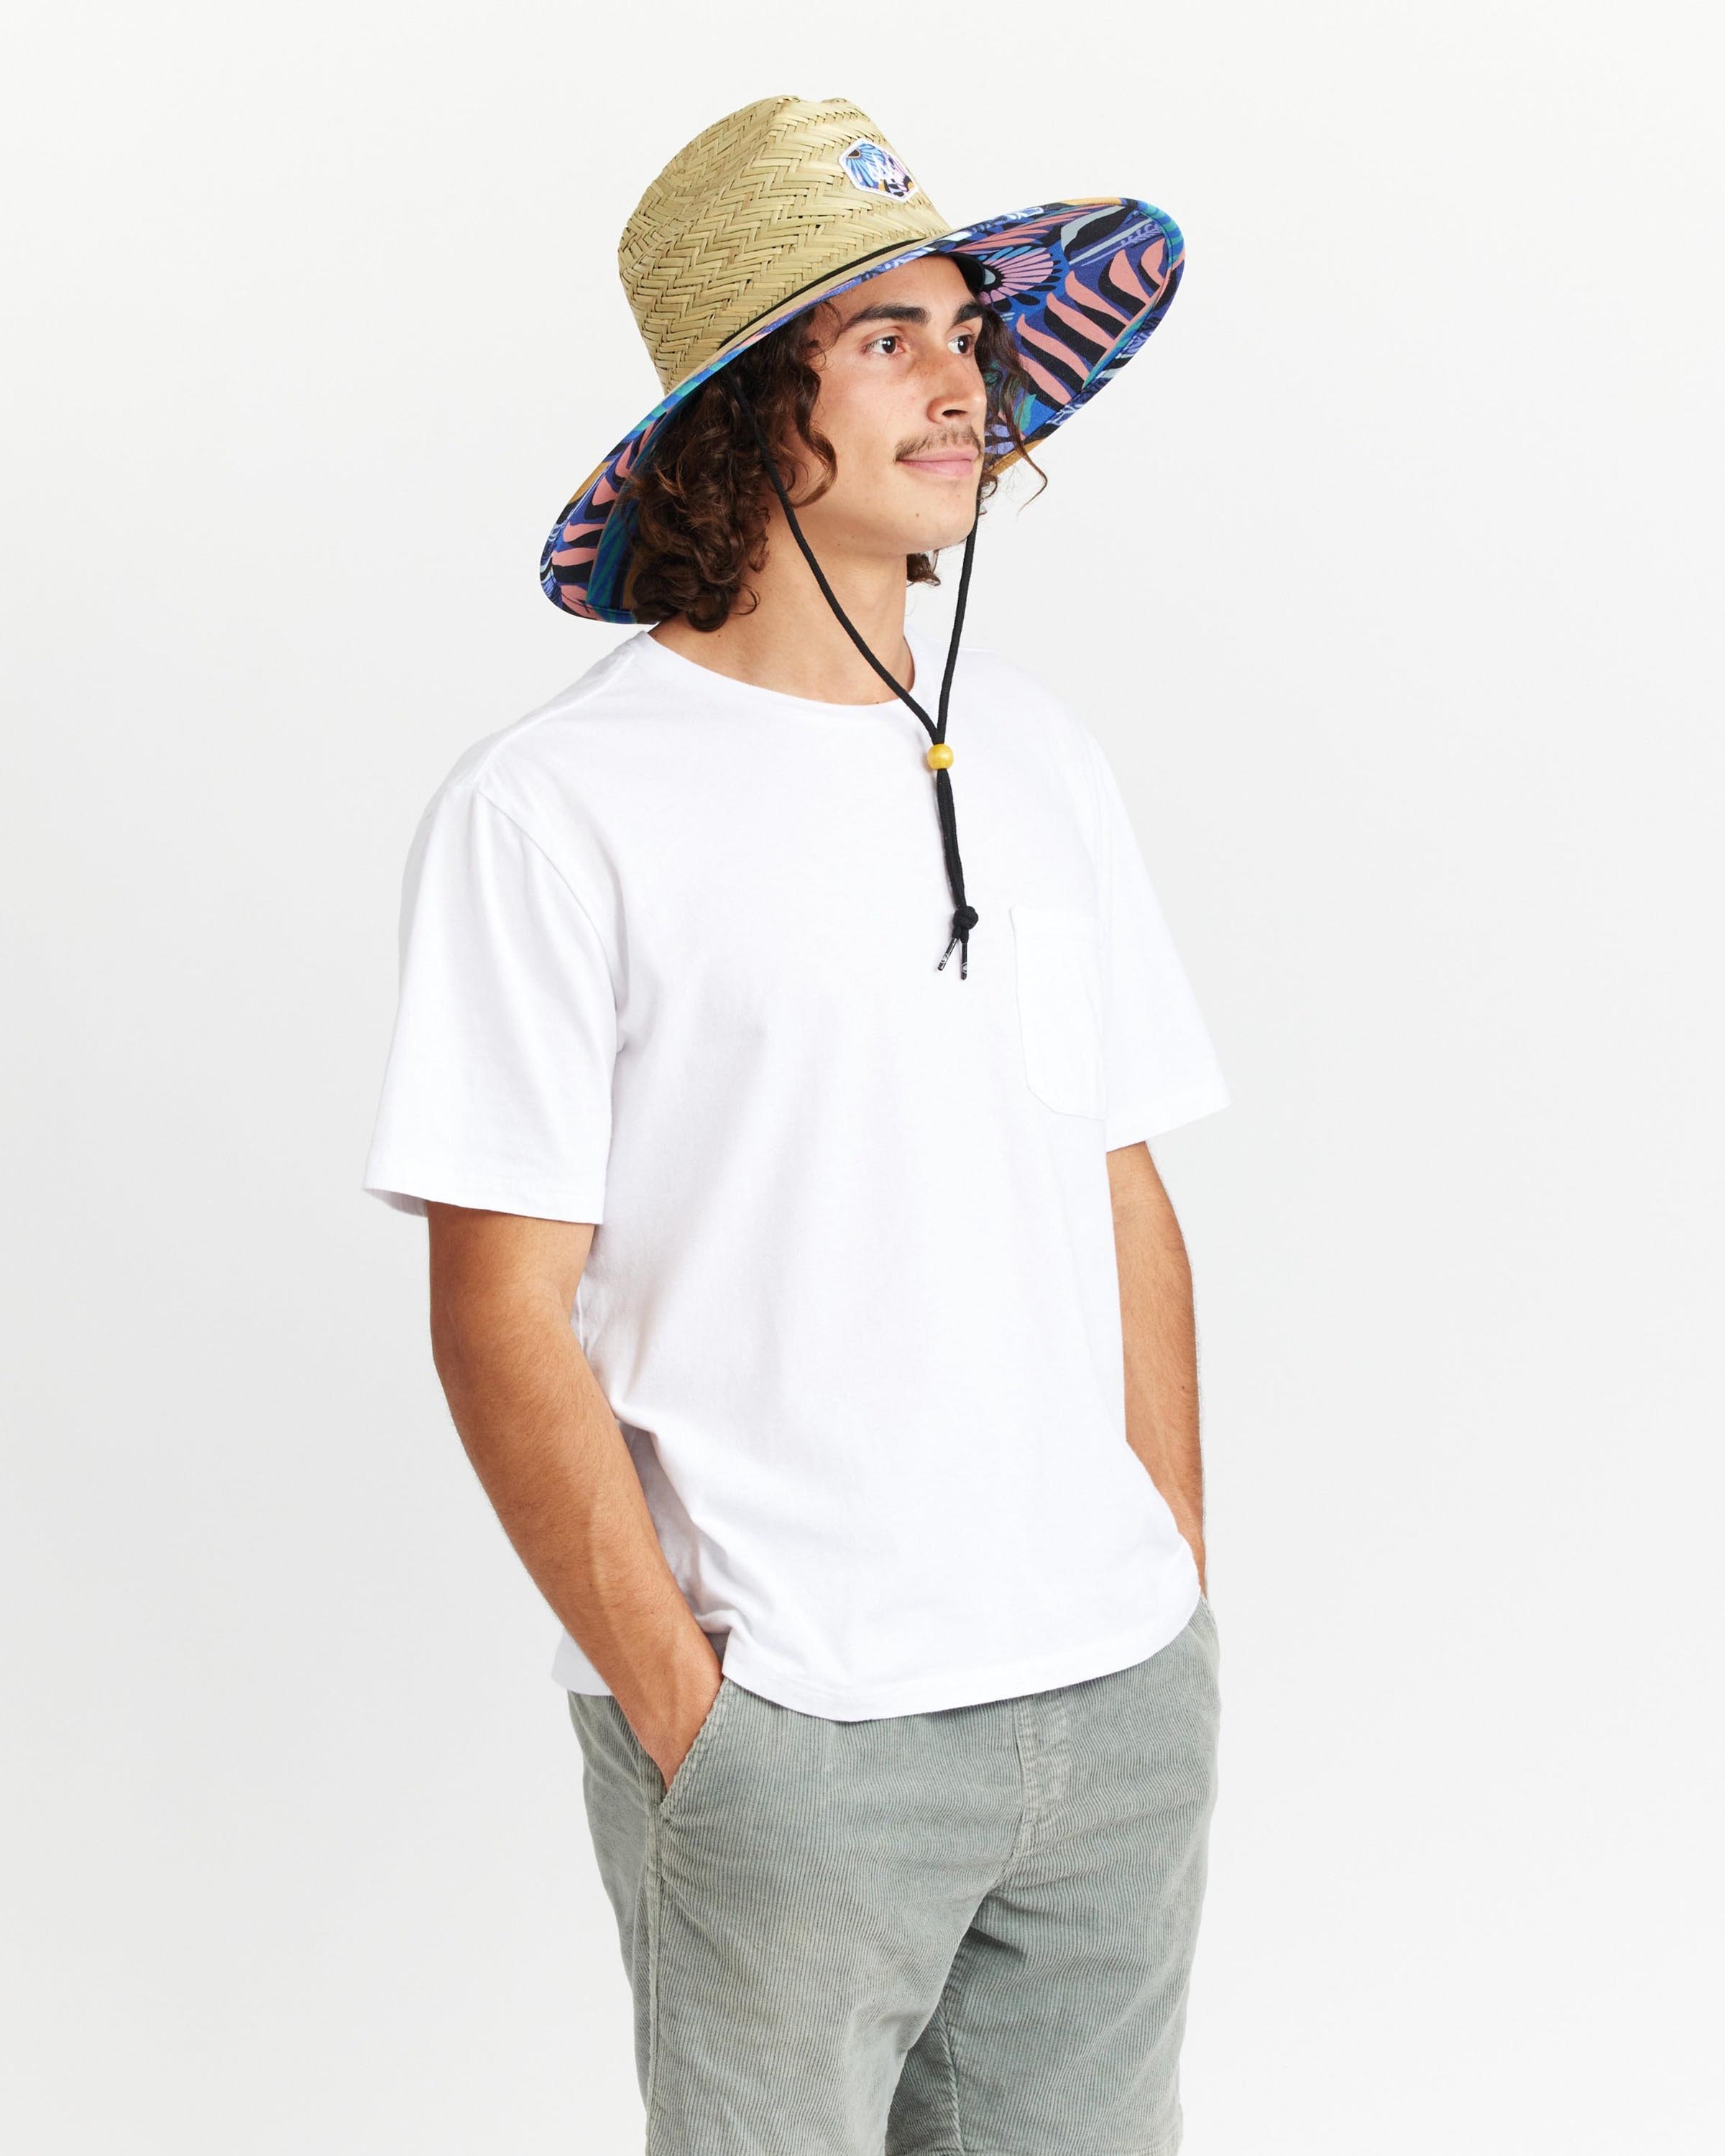 Hemlock male model looking right wearing Eden straw lifeguard hat with purple floral pattern